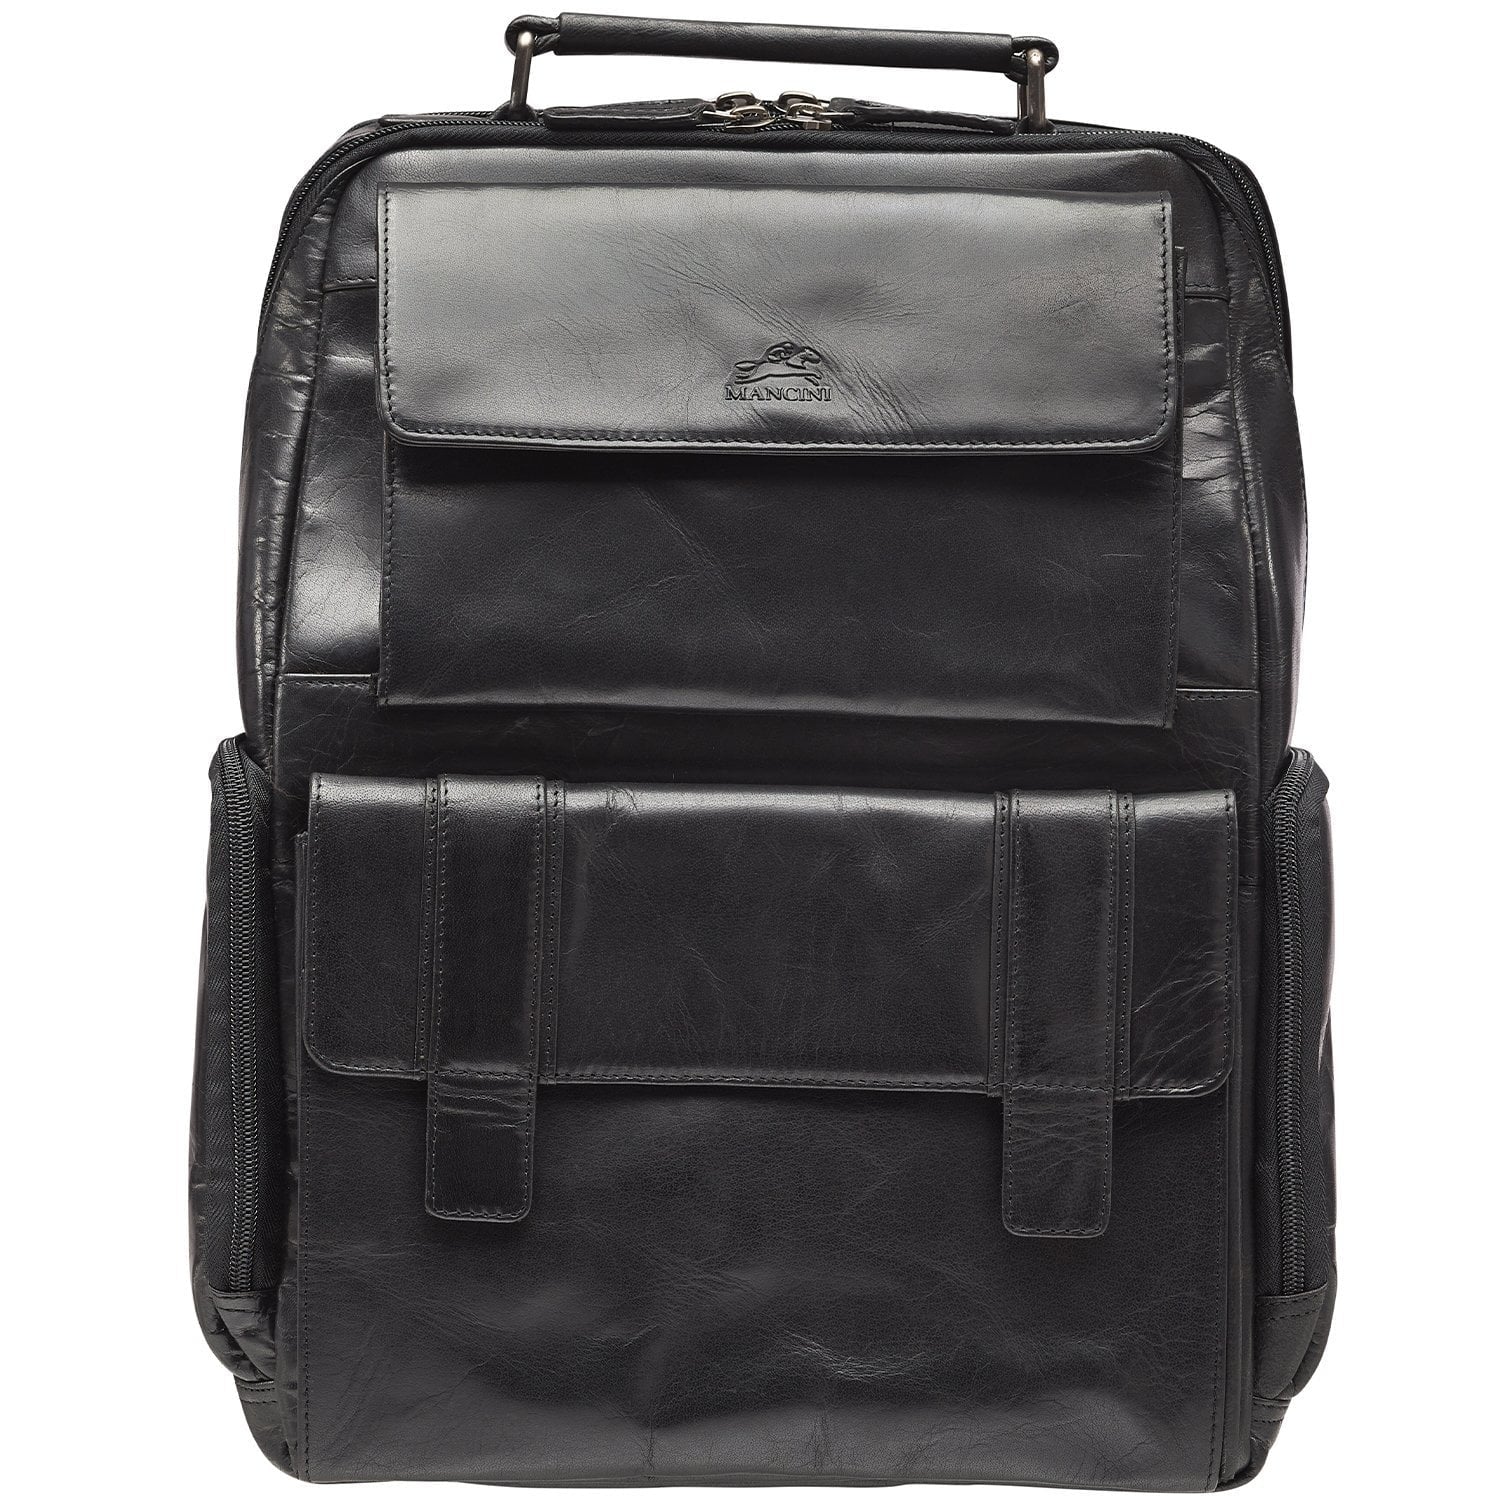 Mancini BUFFALO Backpack with RFID Secure Pocket for 15.6” Laptop - Black